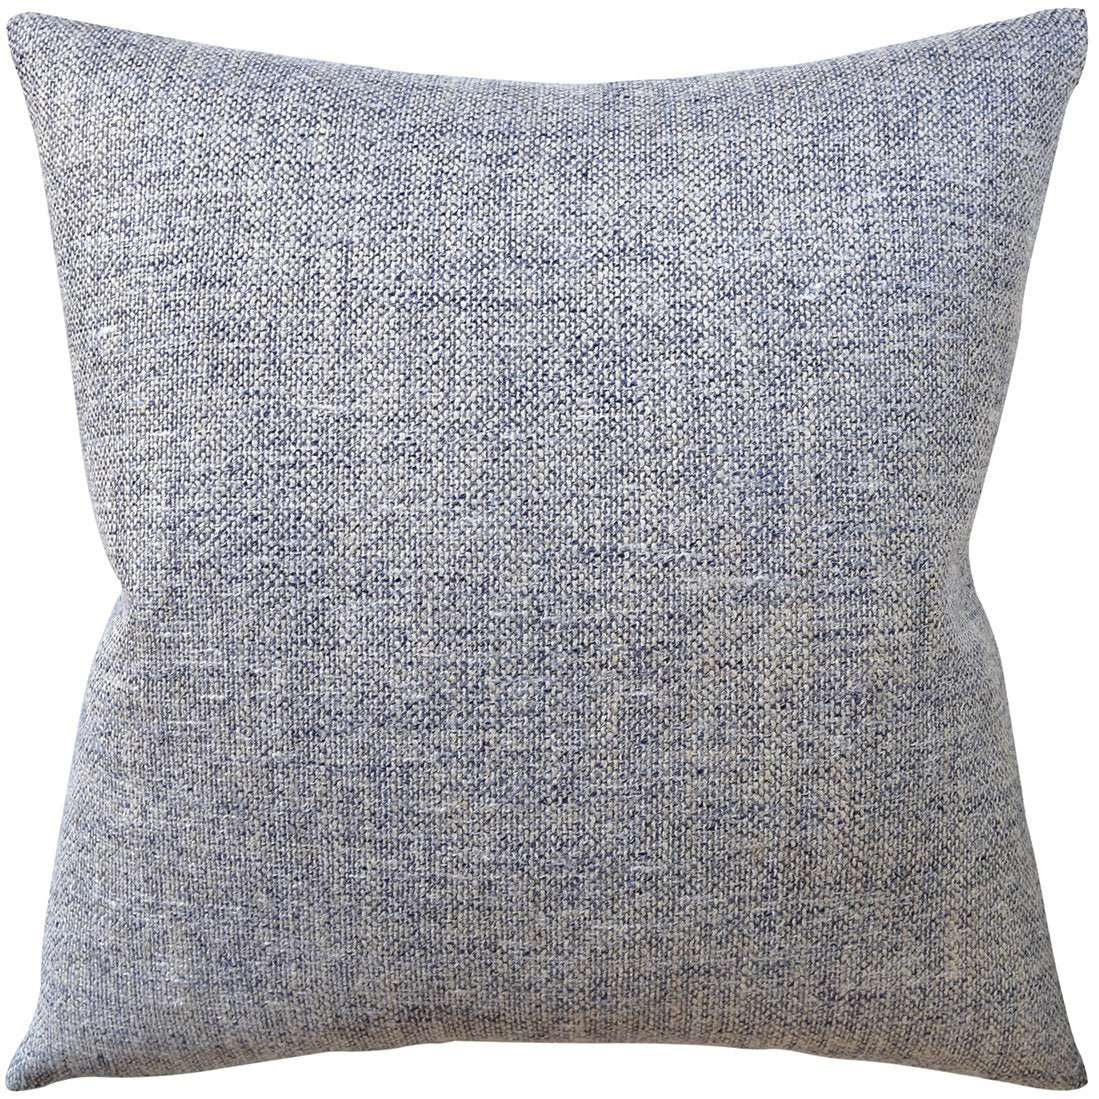 Amagansett Denim Blue Pillow - Ryan Studio at Fig Linens